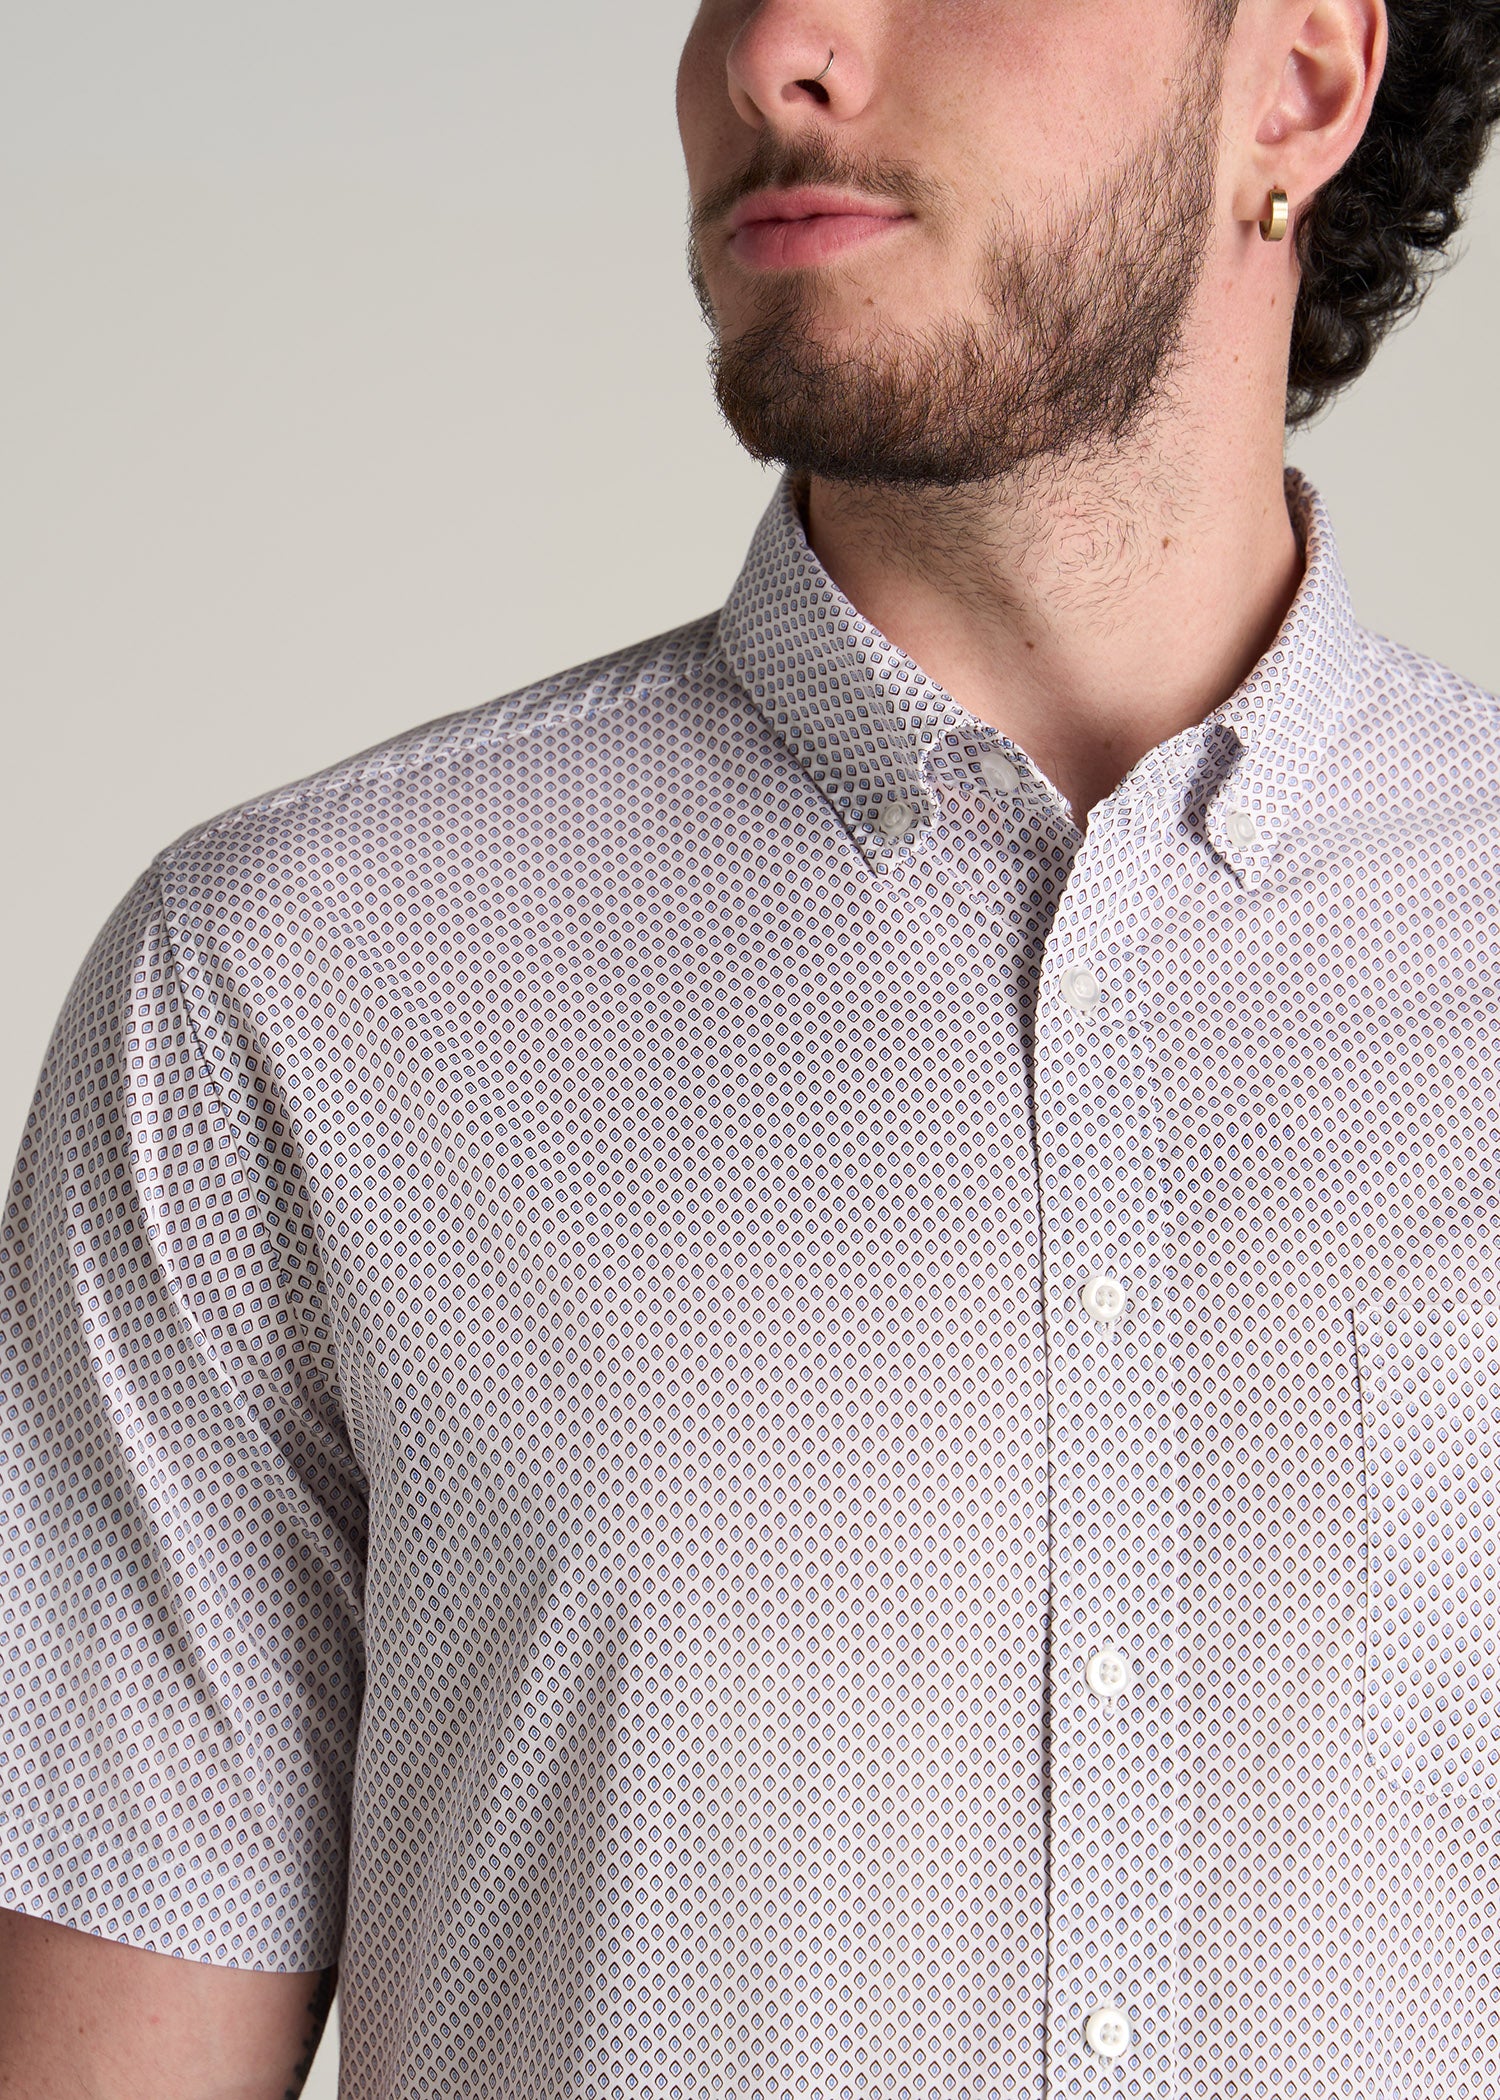         American-Tall-Men-Short-Sleeve-Button-Shirt-Brown-Blue-Diamond-Print-detail